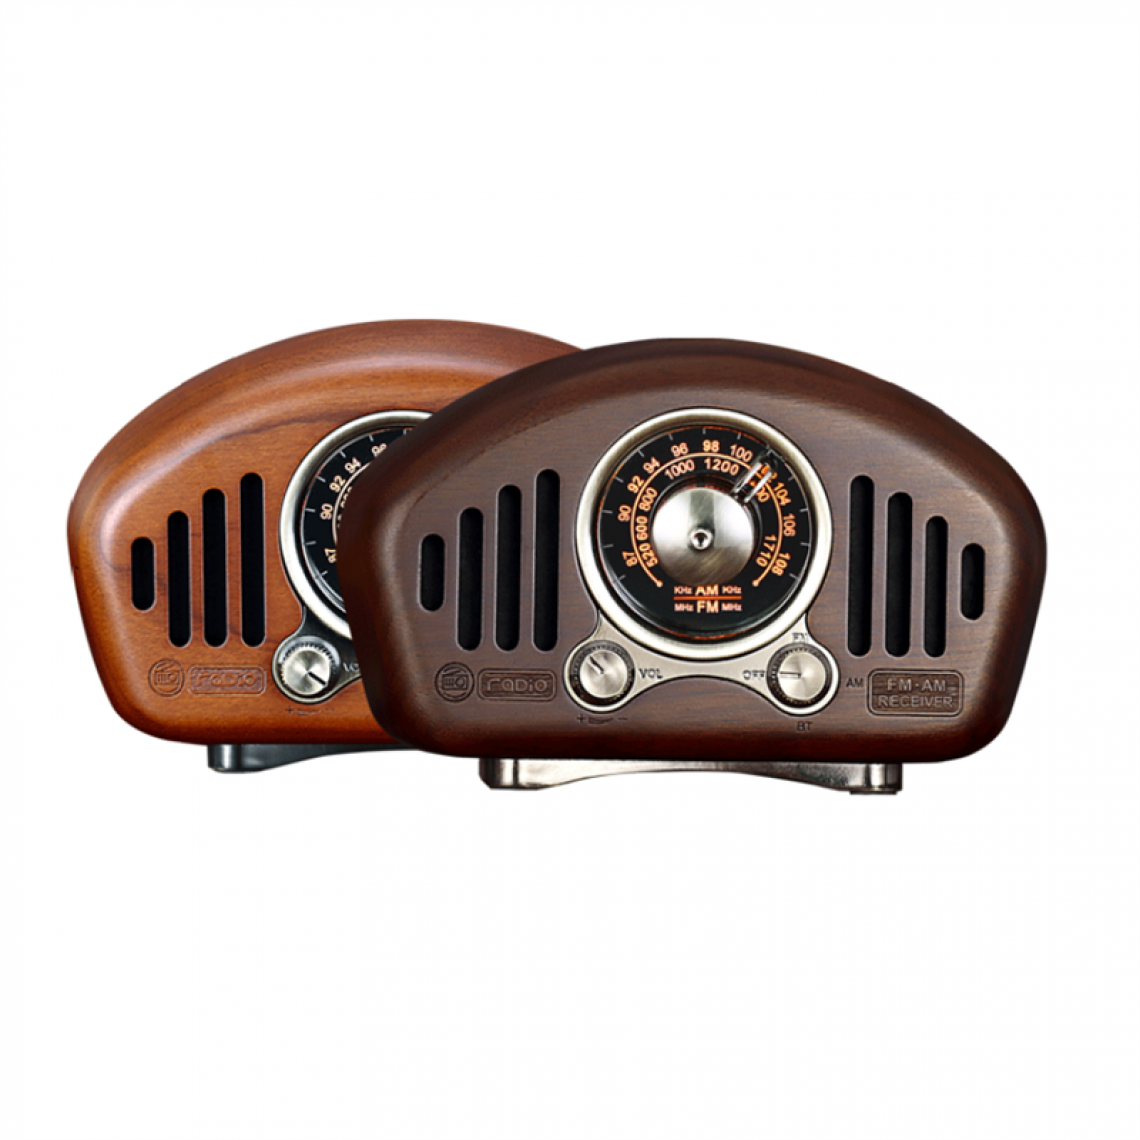 Deoditoo - Mini Haut-Parleur Bluetooth Design Rétro et Radio-FM R909-A/C (Brun Clair) - Enceinte PC